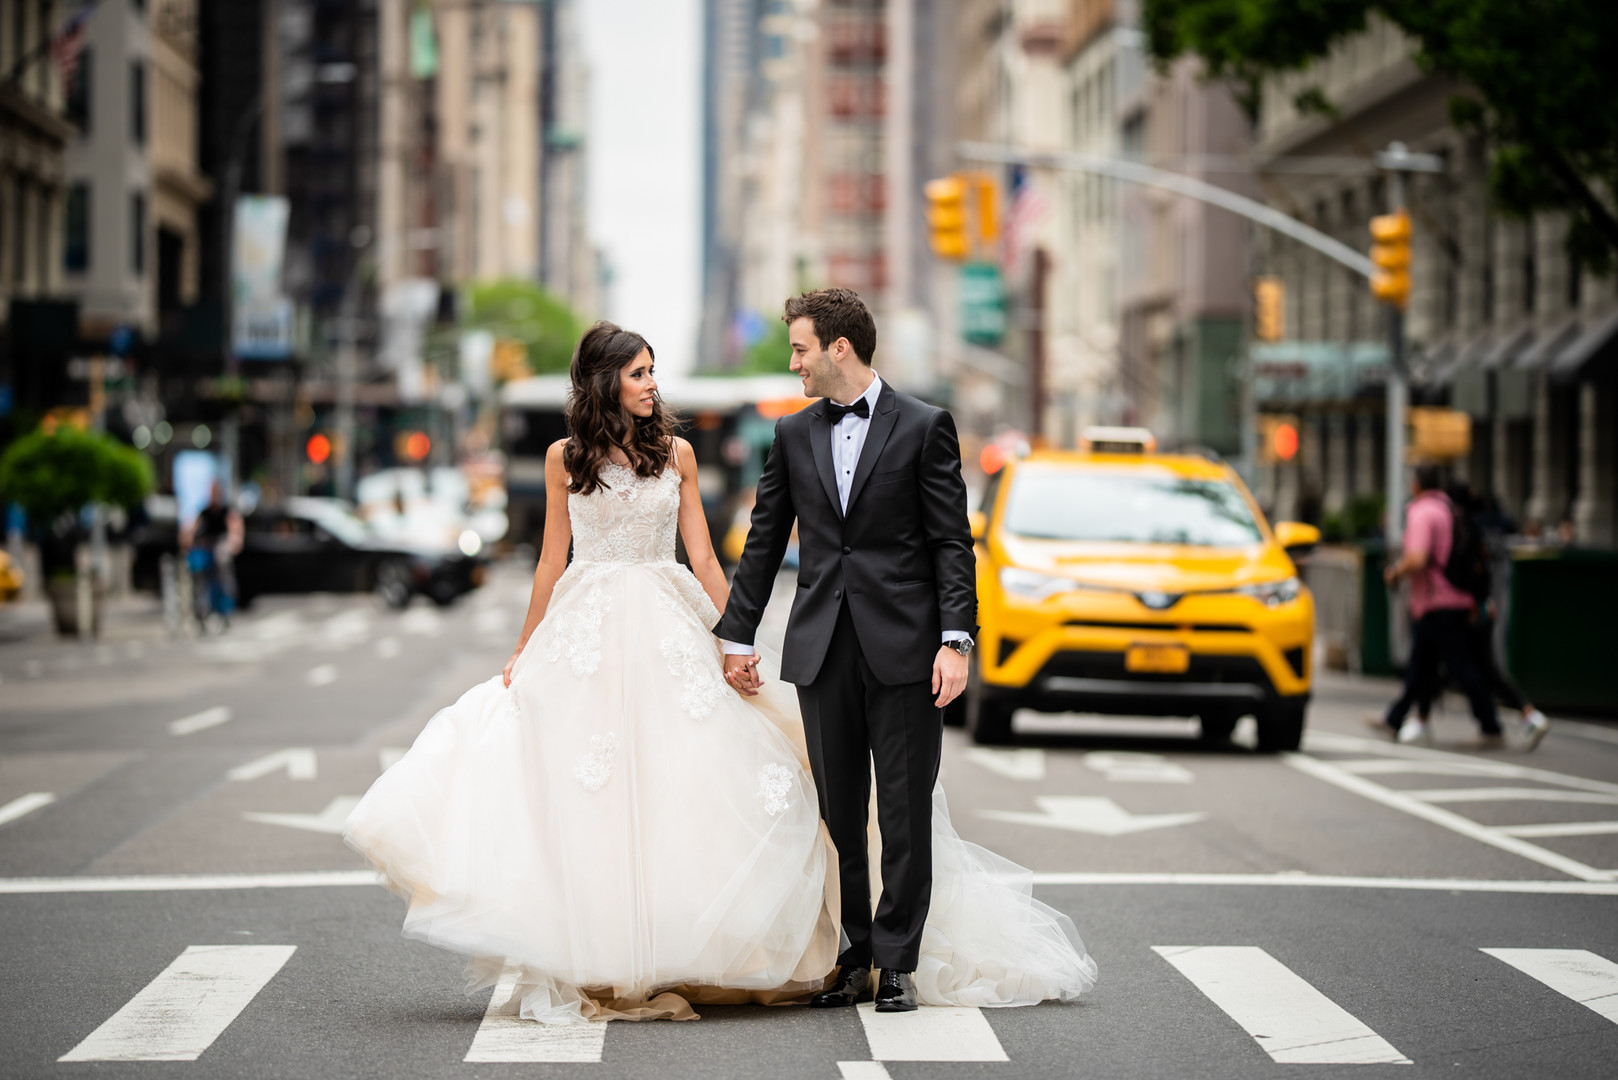 Wedding at Kimpton Hotel Eventi, NYC Wedding, NYC Wedding Photos at Flatiron Building, Jewish Wedding NYC